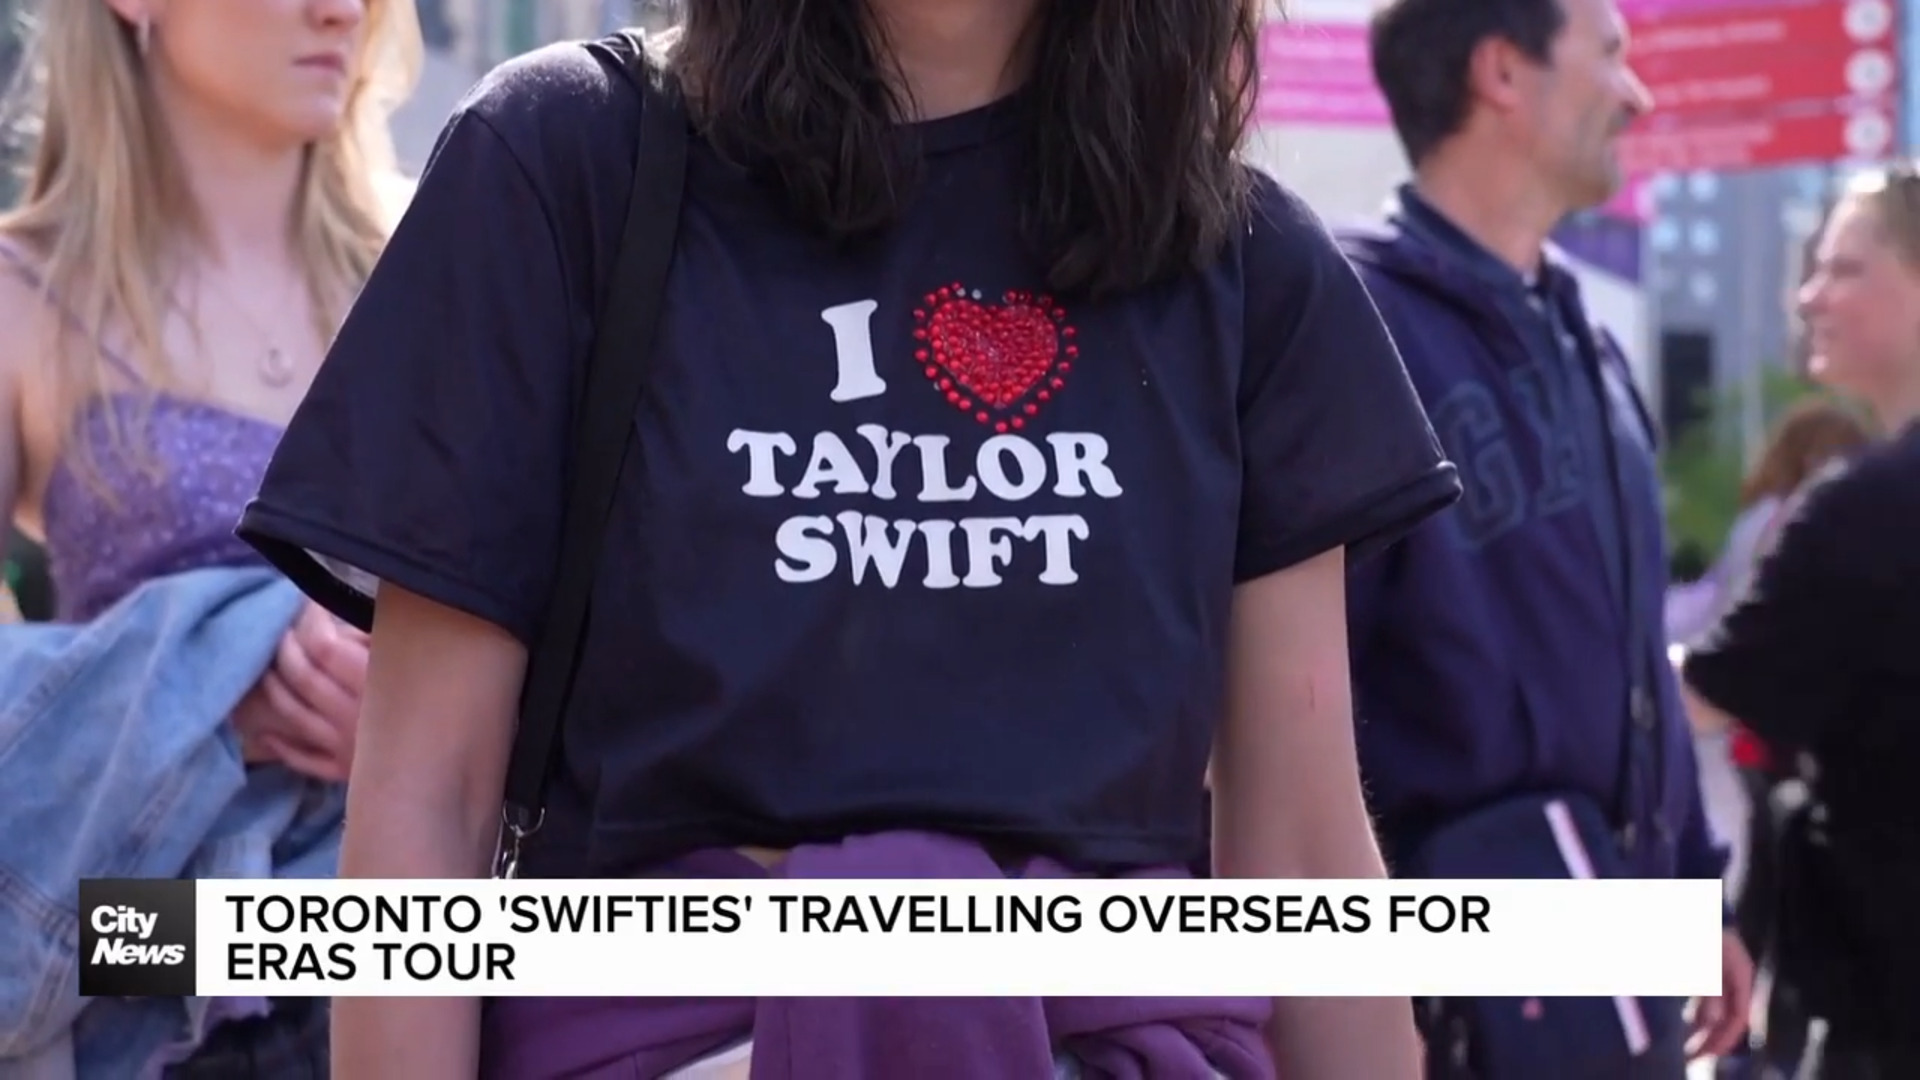 Swifties flock to Europe amidst sky-high Toronto ticket prices